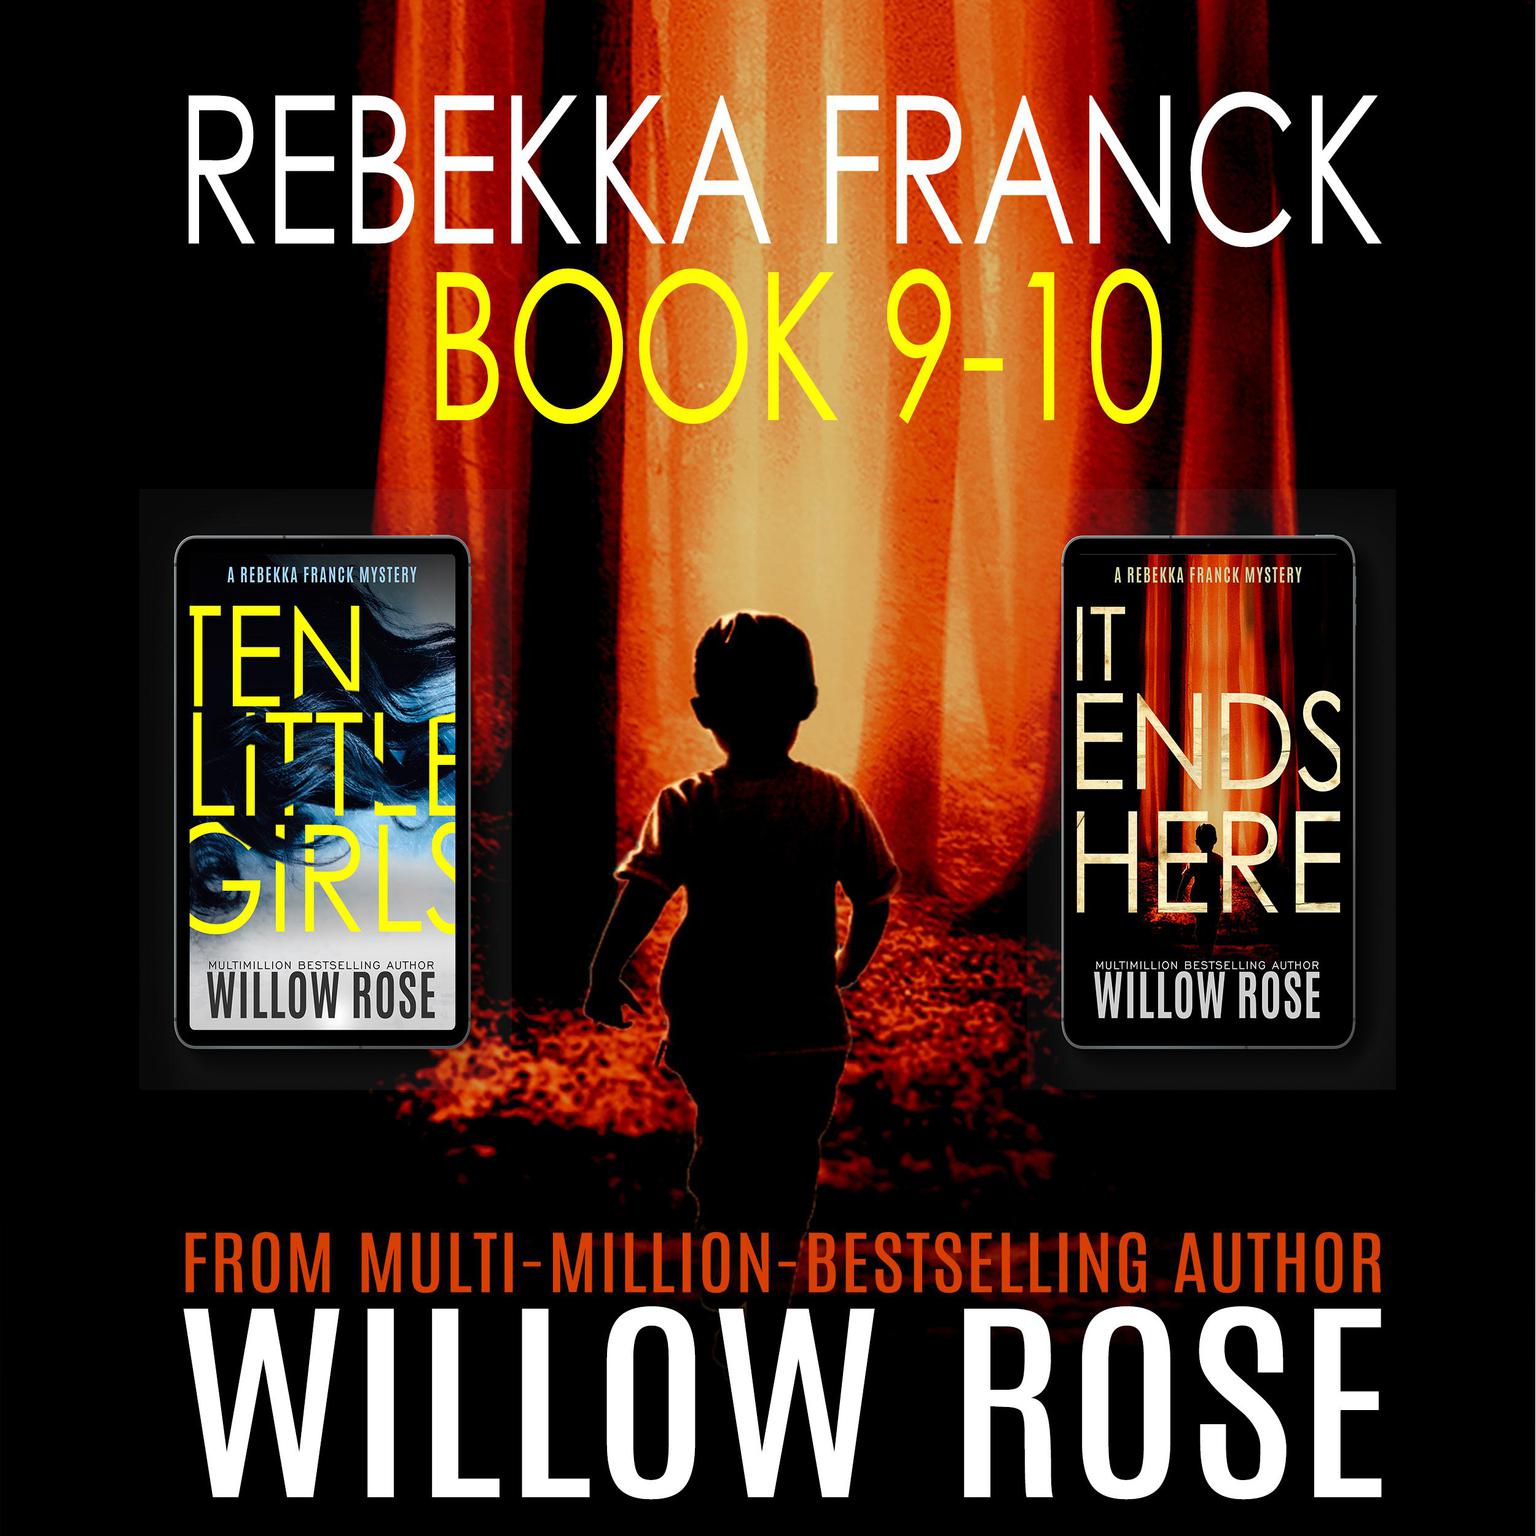 Rebekka Franck: Book 9-10 Audiobook, by Willow Rose